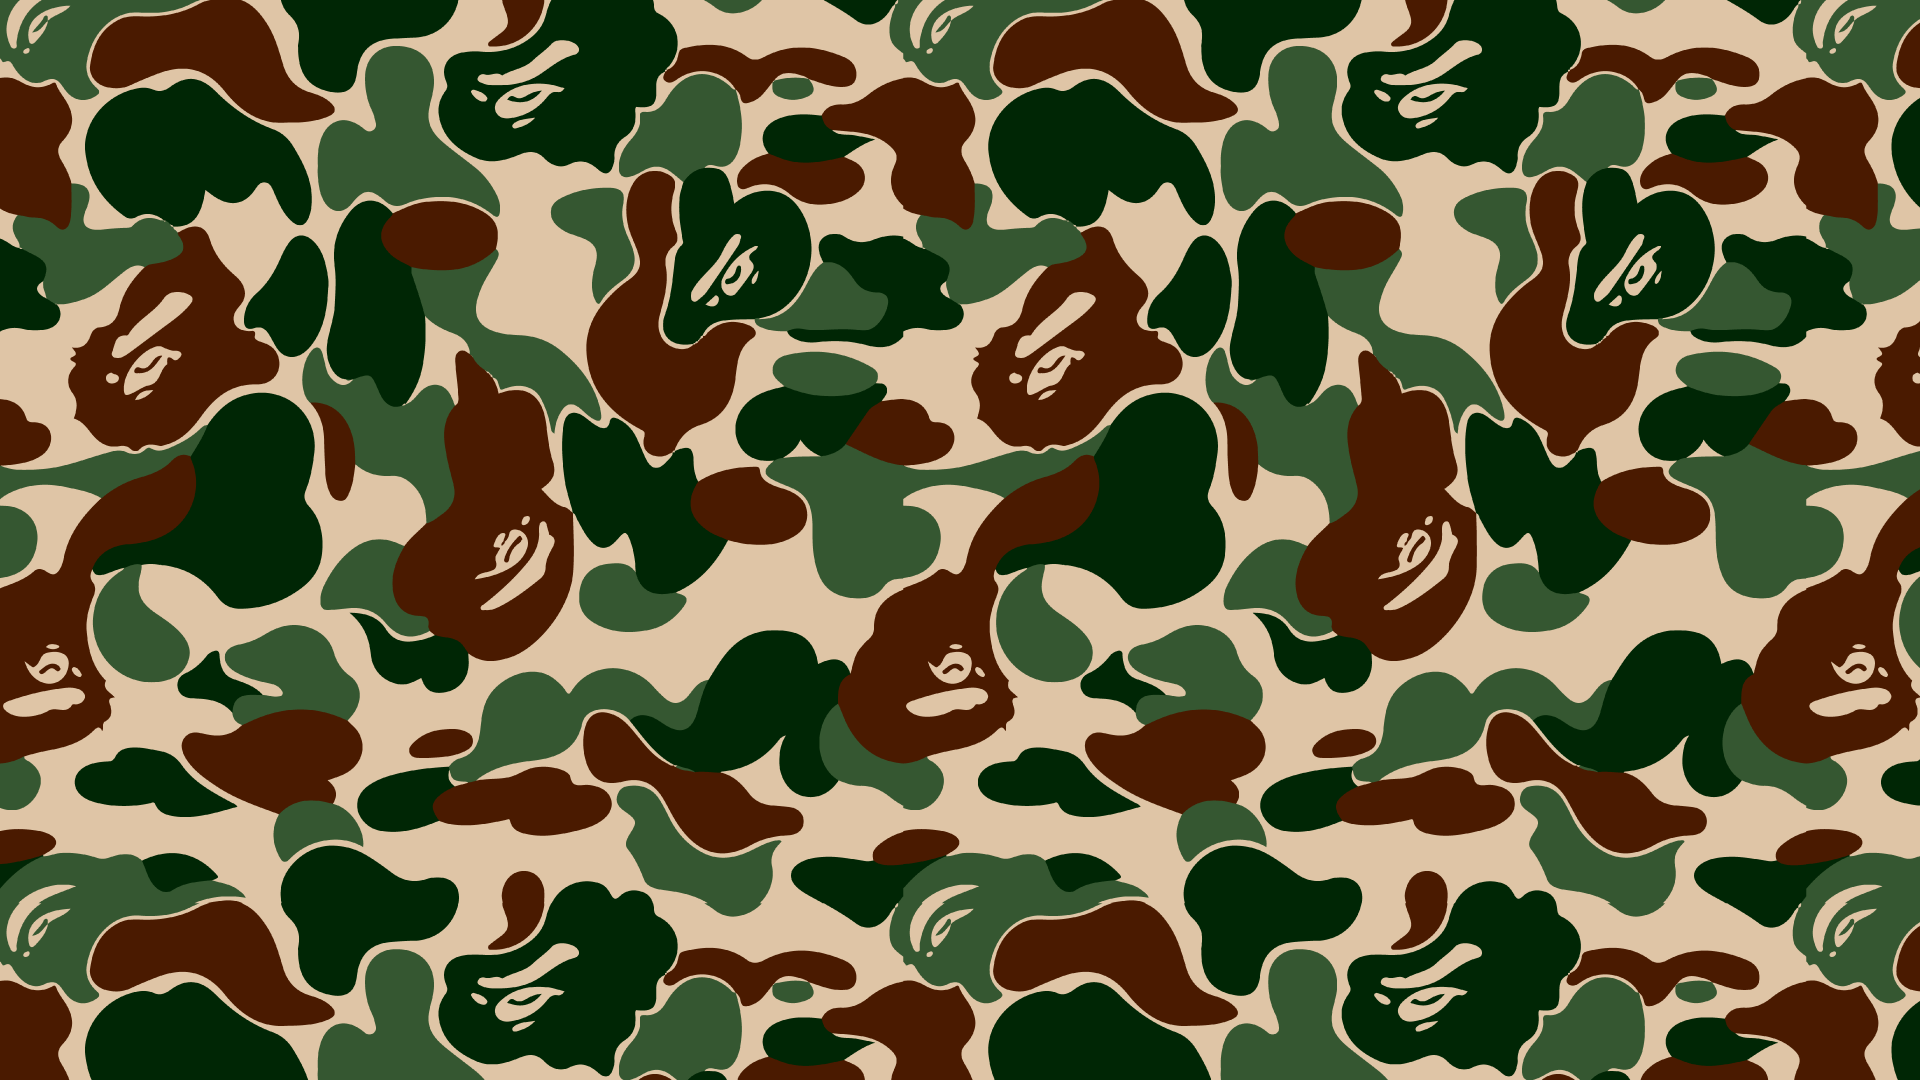  BAPE Shark Camouflage wallpaper   Wallery